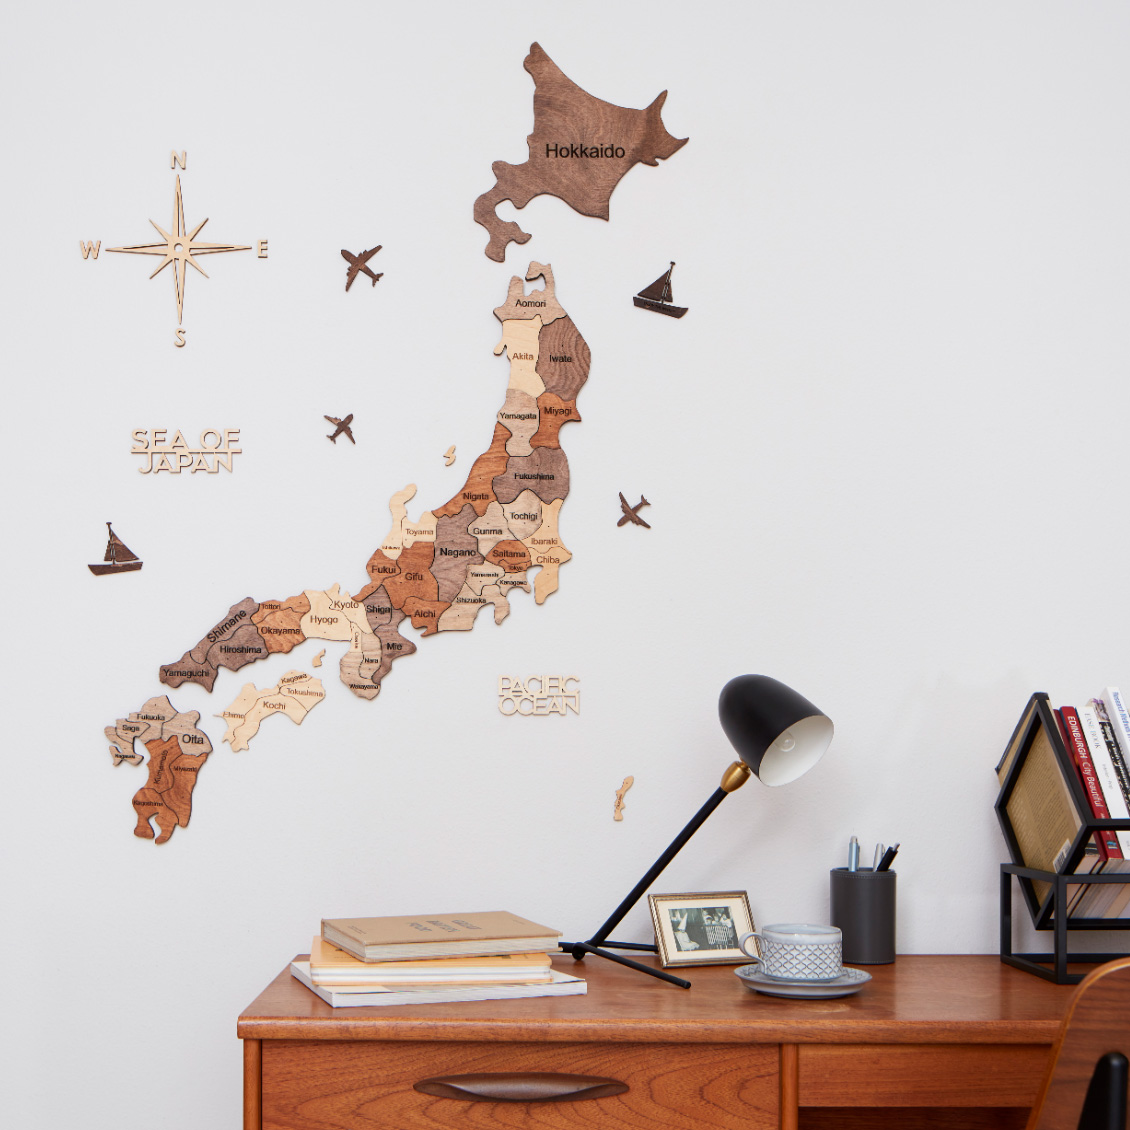 3d 知育玩具 学習玩具 紙の世界地図や地球儀では感じられないダイナミックさを持つ高級の壁掛け木製世界地図 インテリア用壁掛け木製日本地図 On Wood Japan Goショップ The Map 地図 地球儀 Map